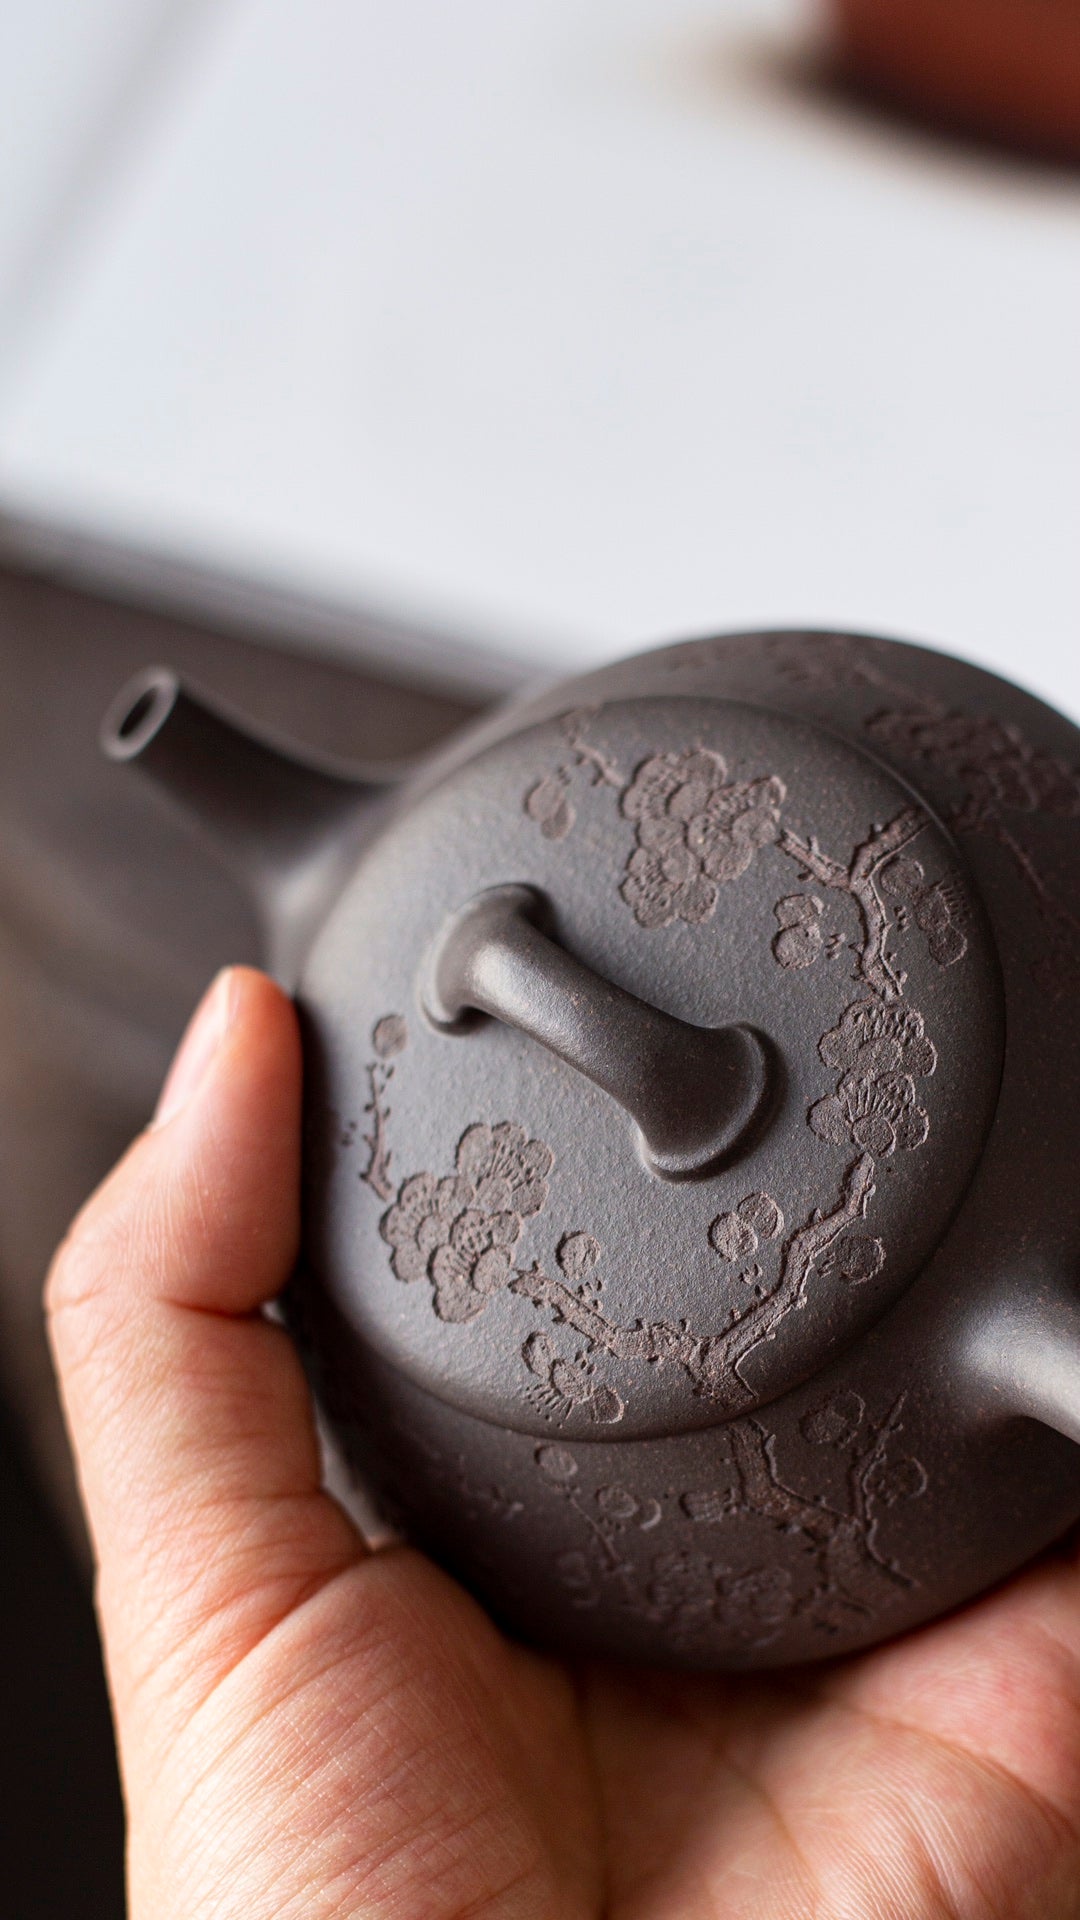 Top-quality ash-clearing three-legged rhyme purple clay teapot